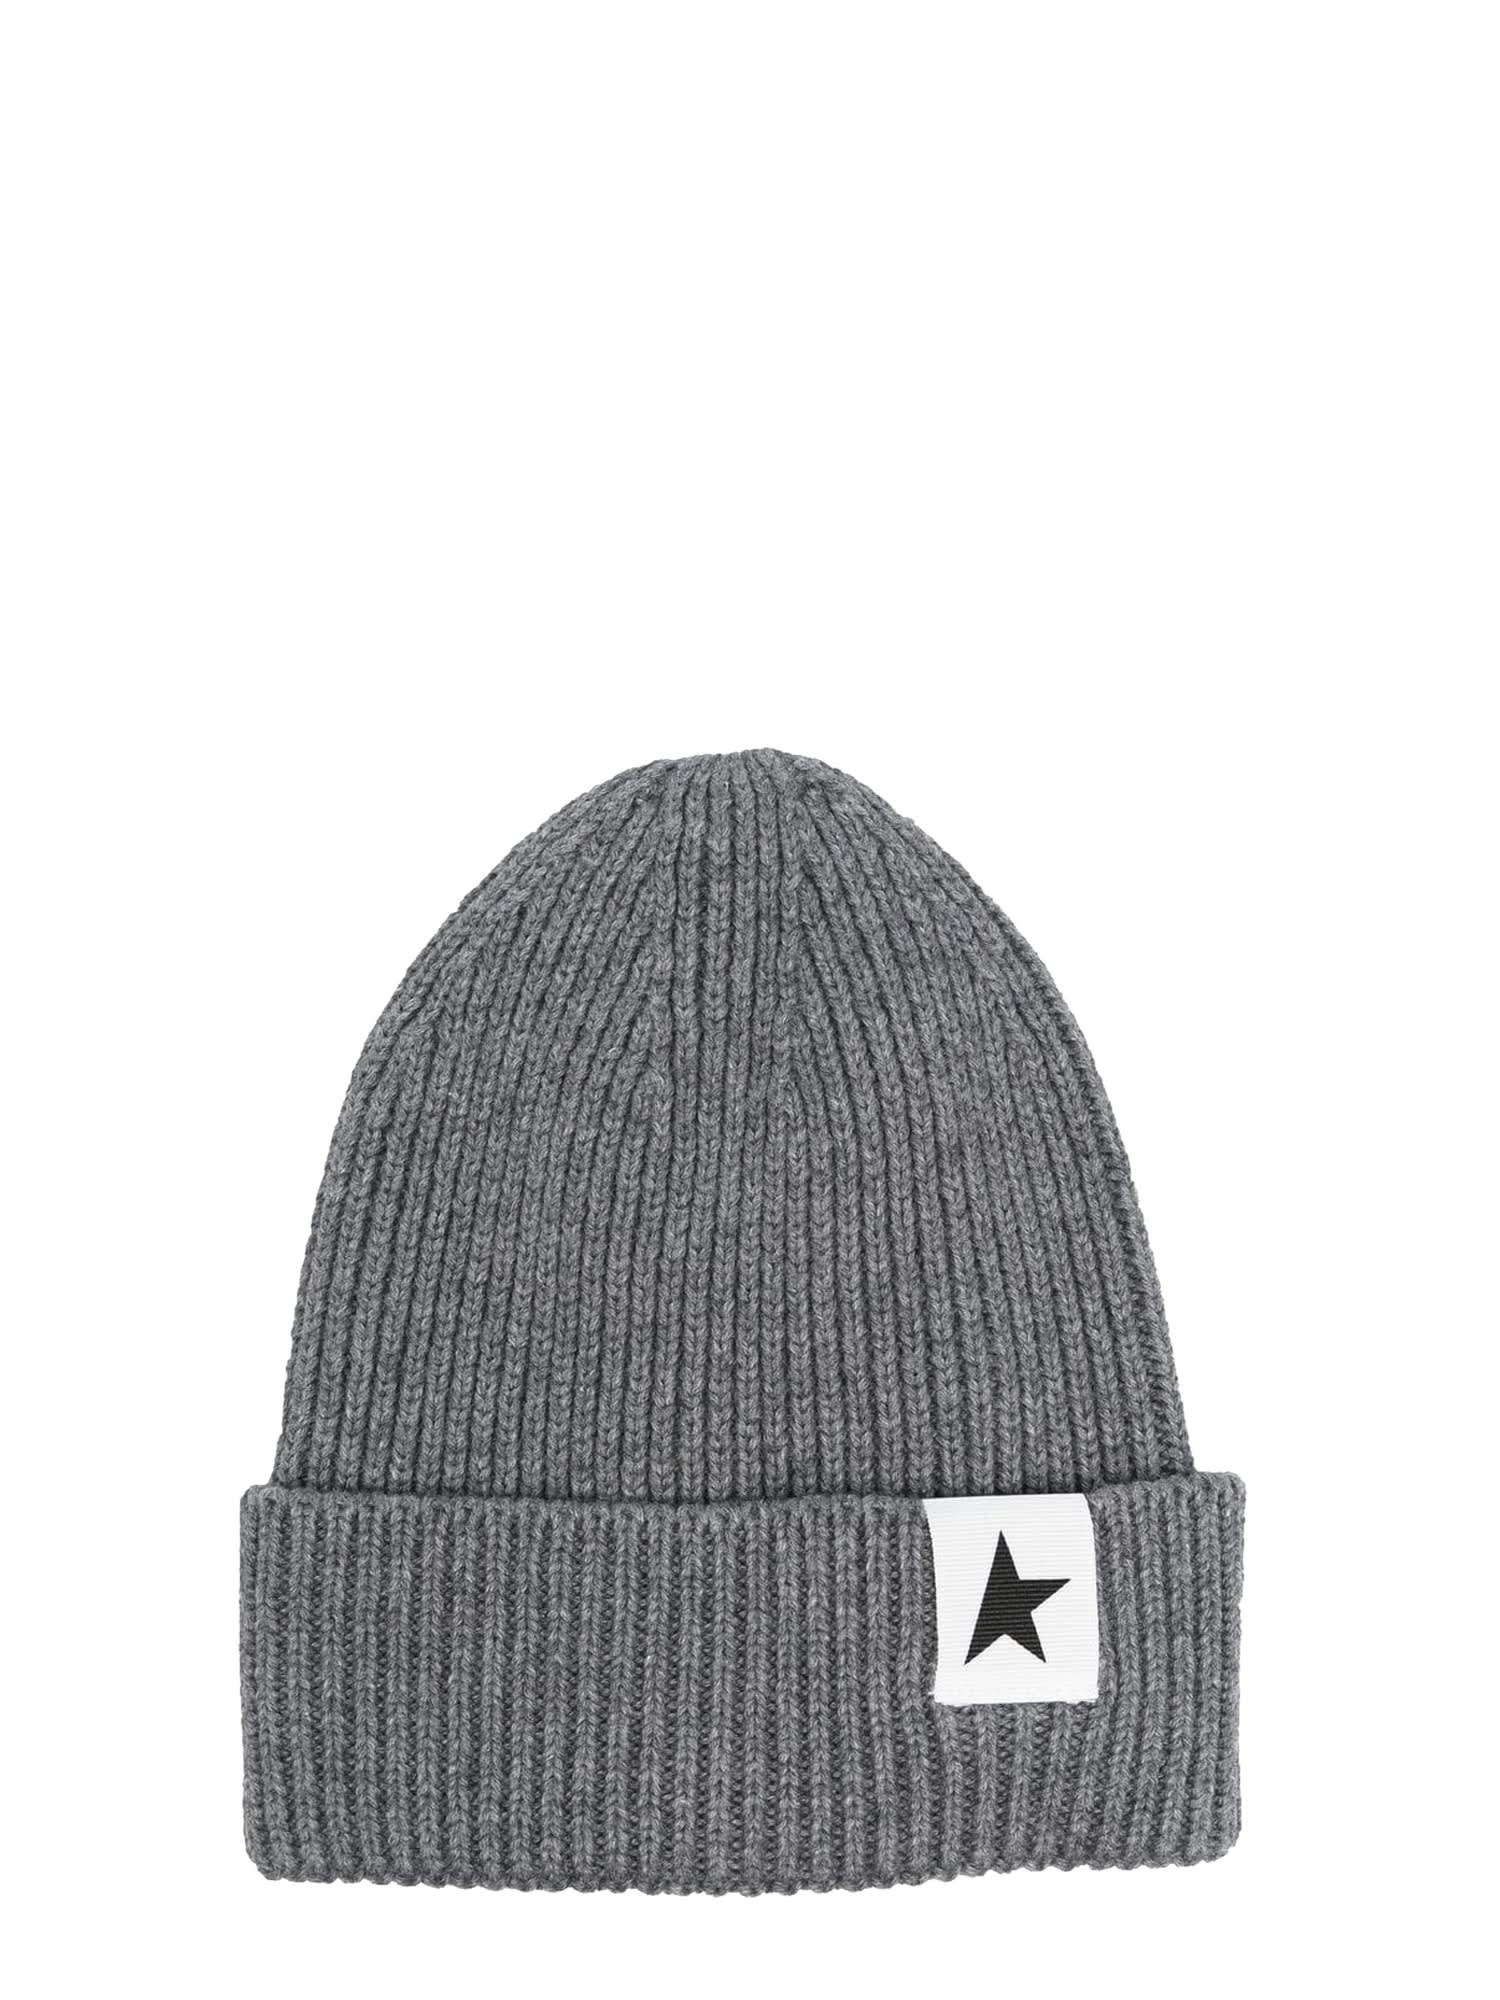 Golden Goose Star/ Boys Knit Beanie Hat